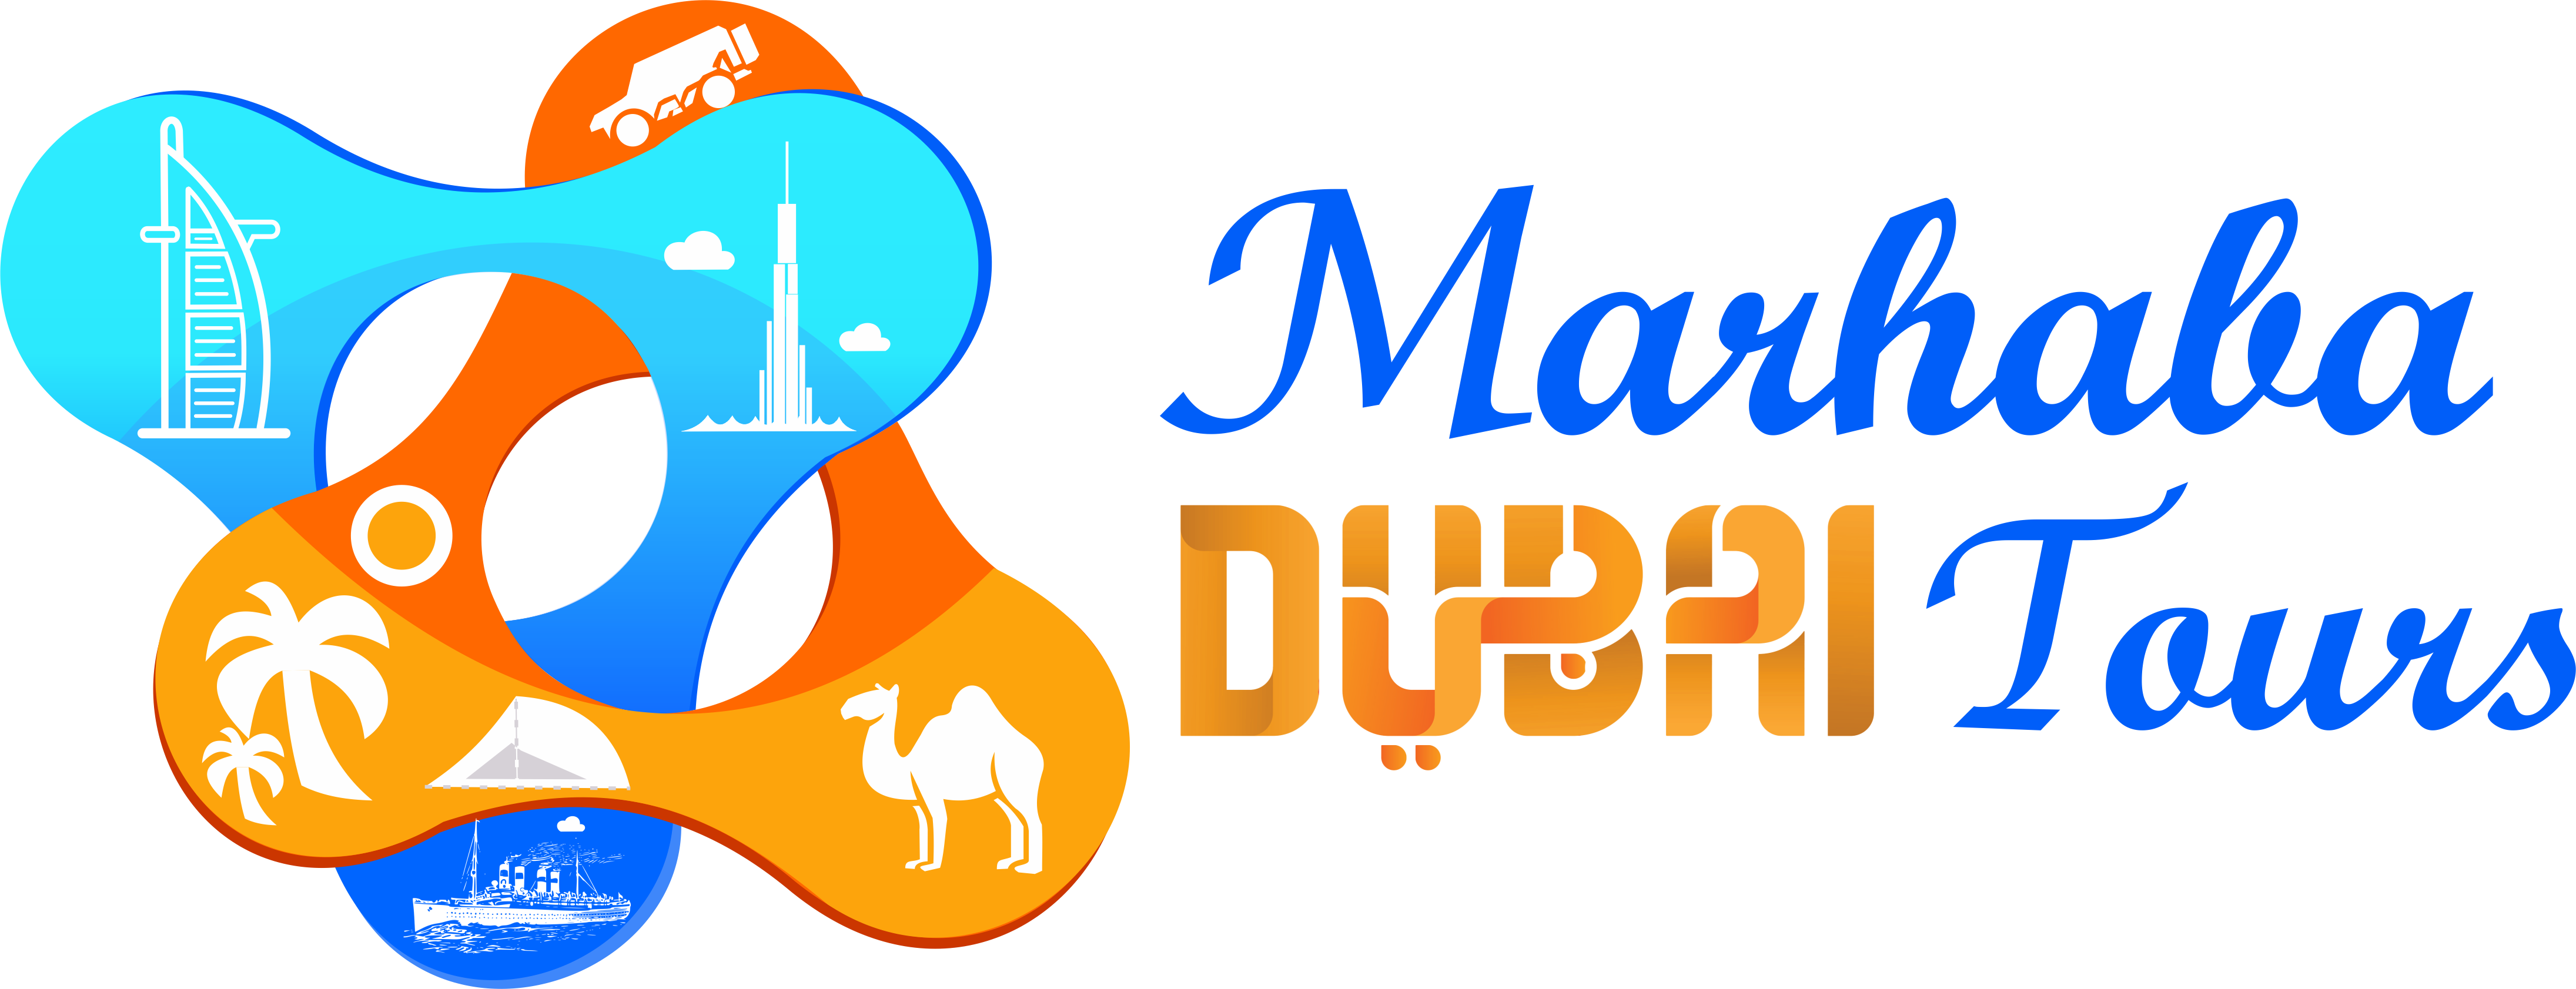 Welcome To Marhaba Dubai Tours - Graphic Design (4382x1683)